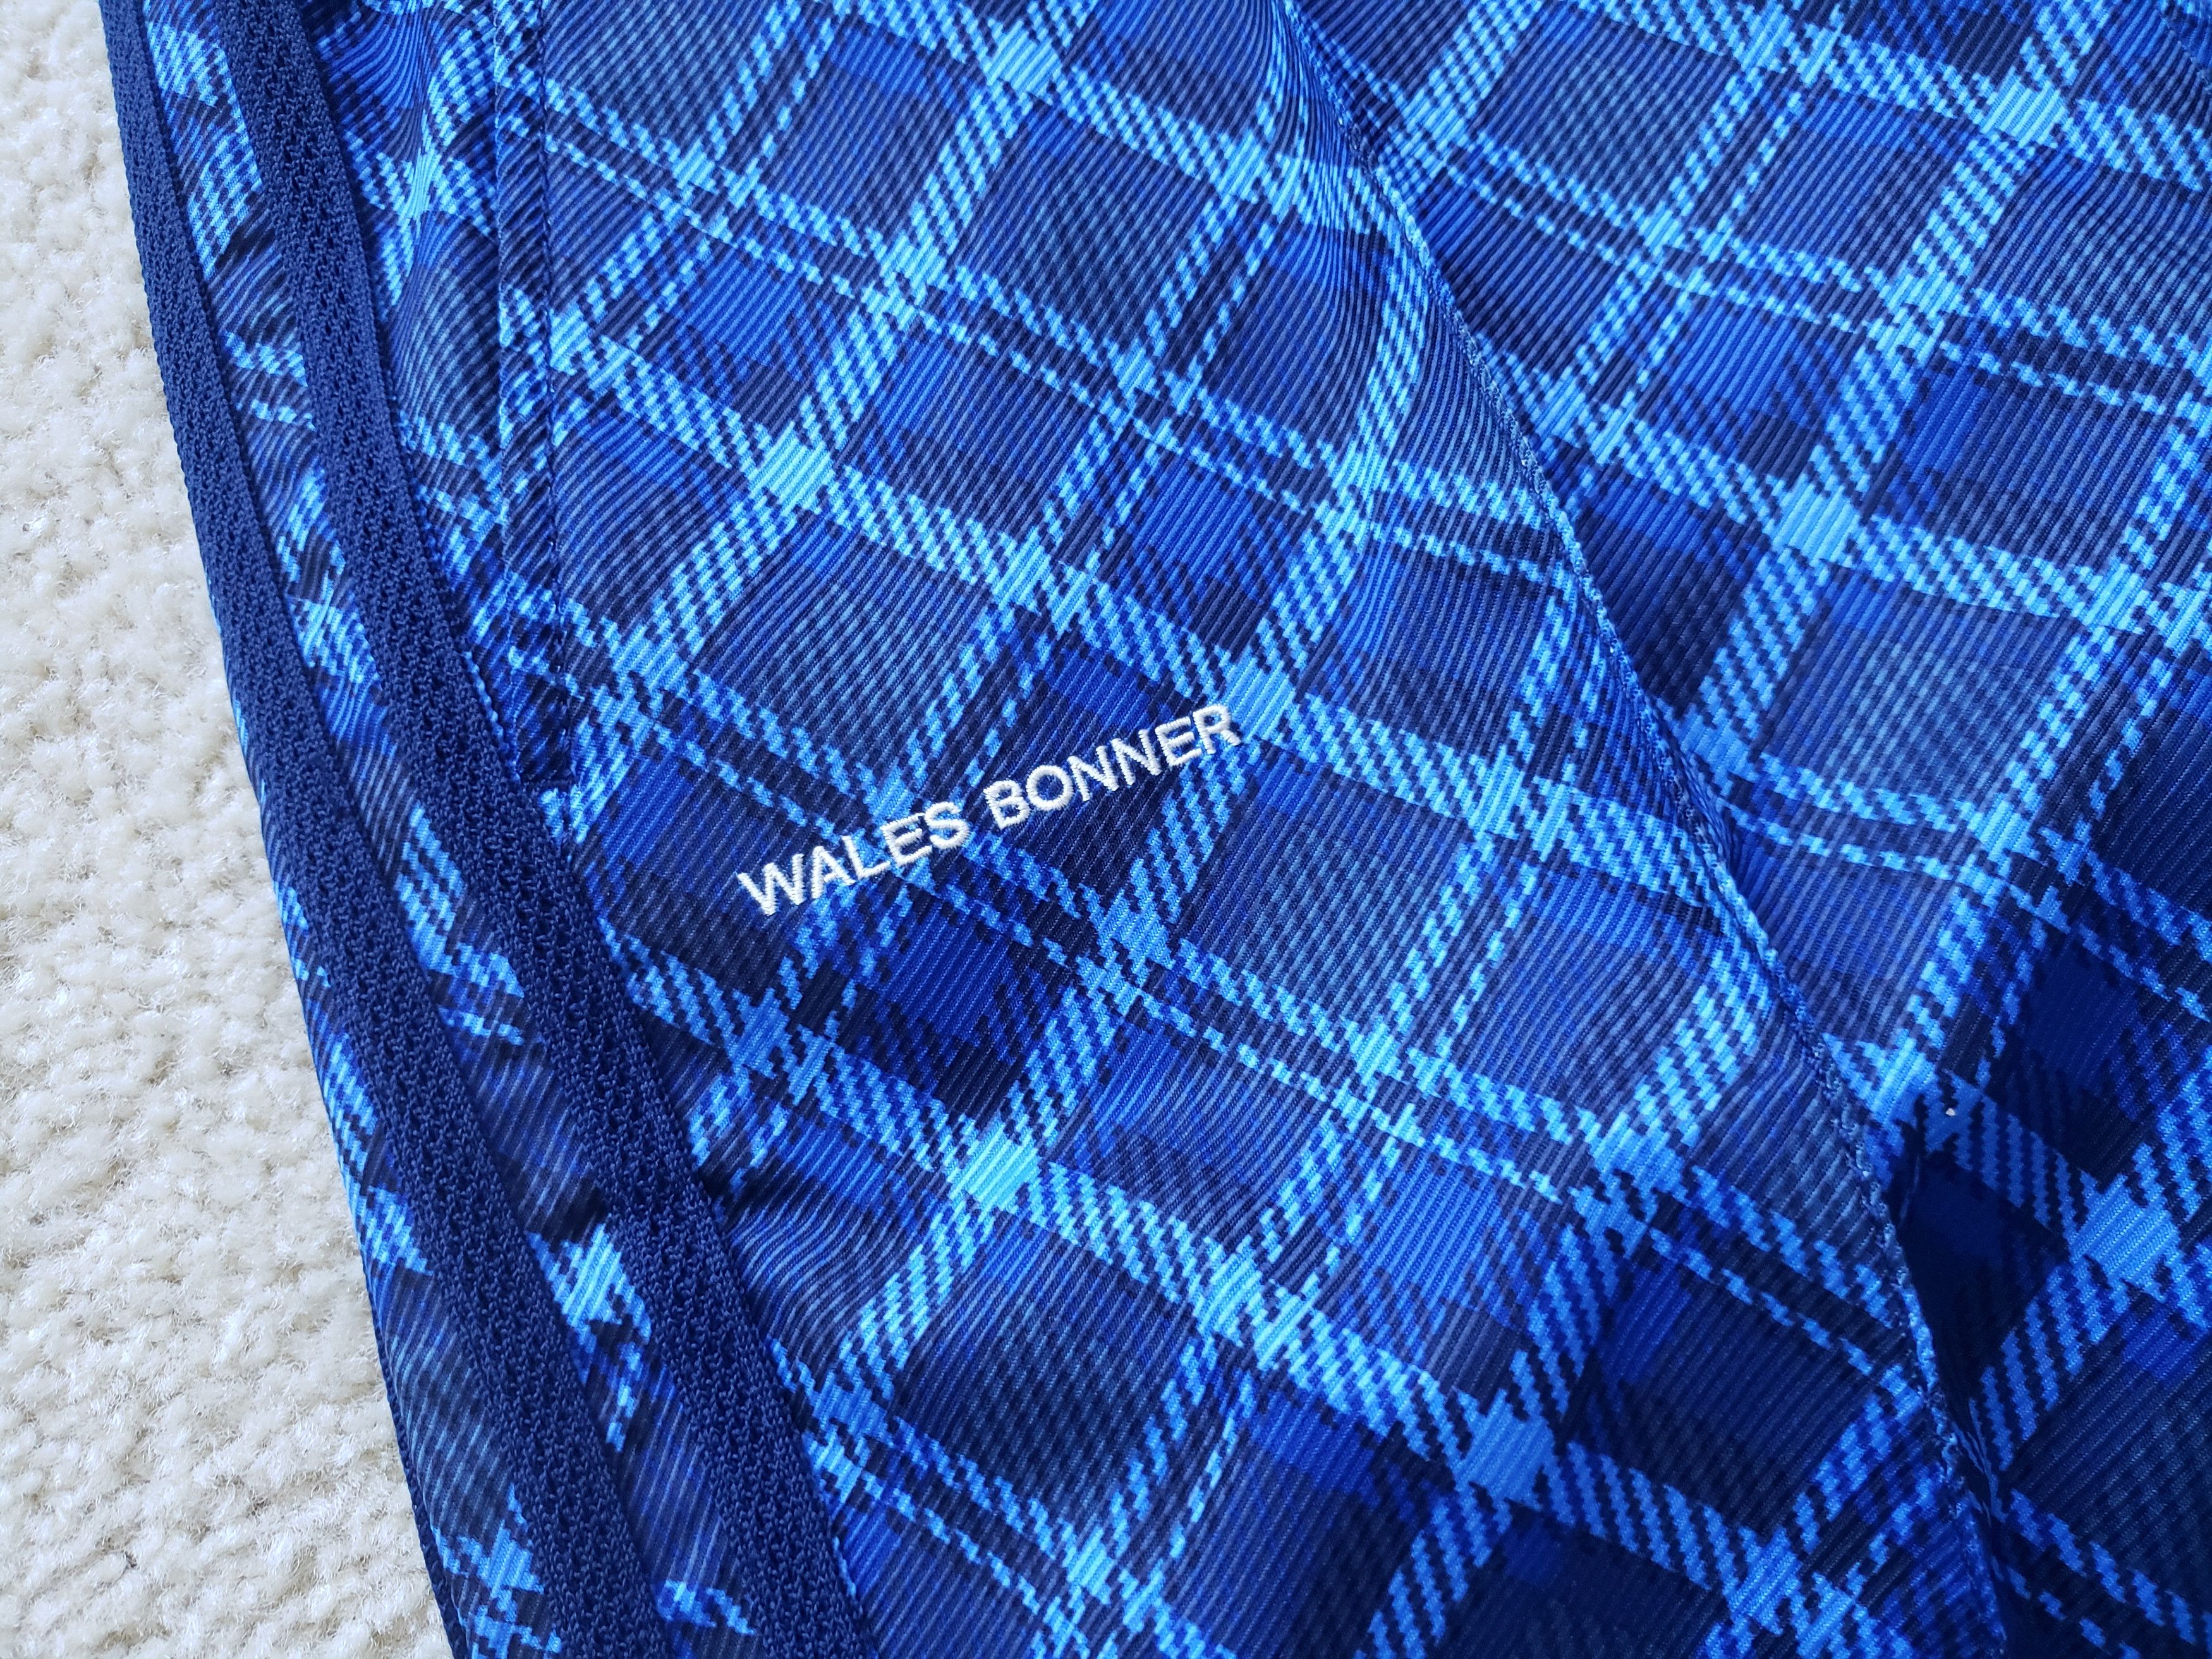 Adidas NEW ADIDAS x Wales Bonner Blue Tartan Track Pants L GU0753 Size US 36 / EU 52 - 5 Thumbnail